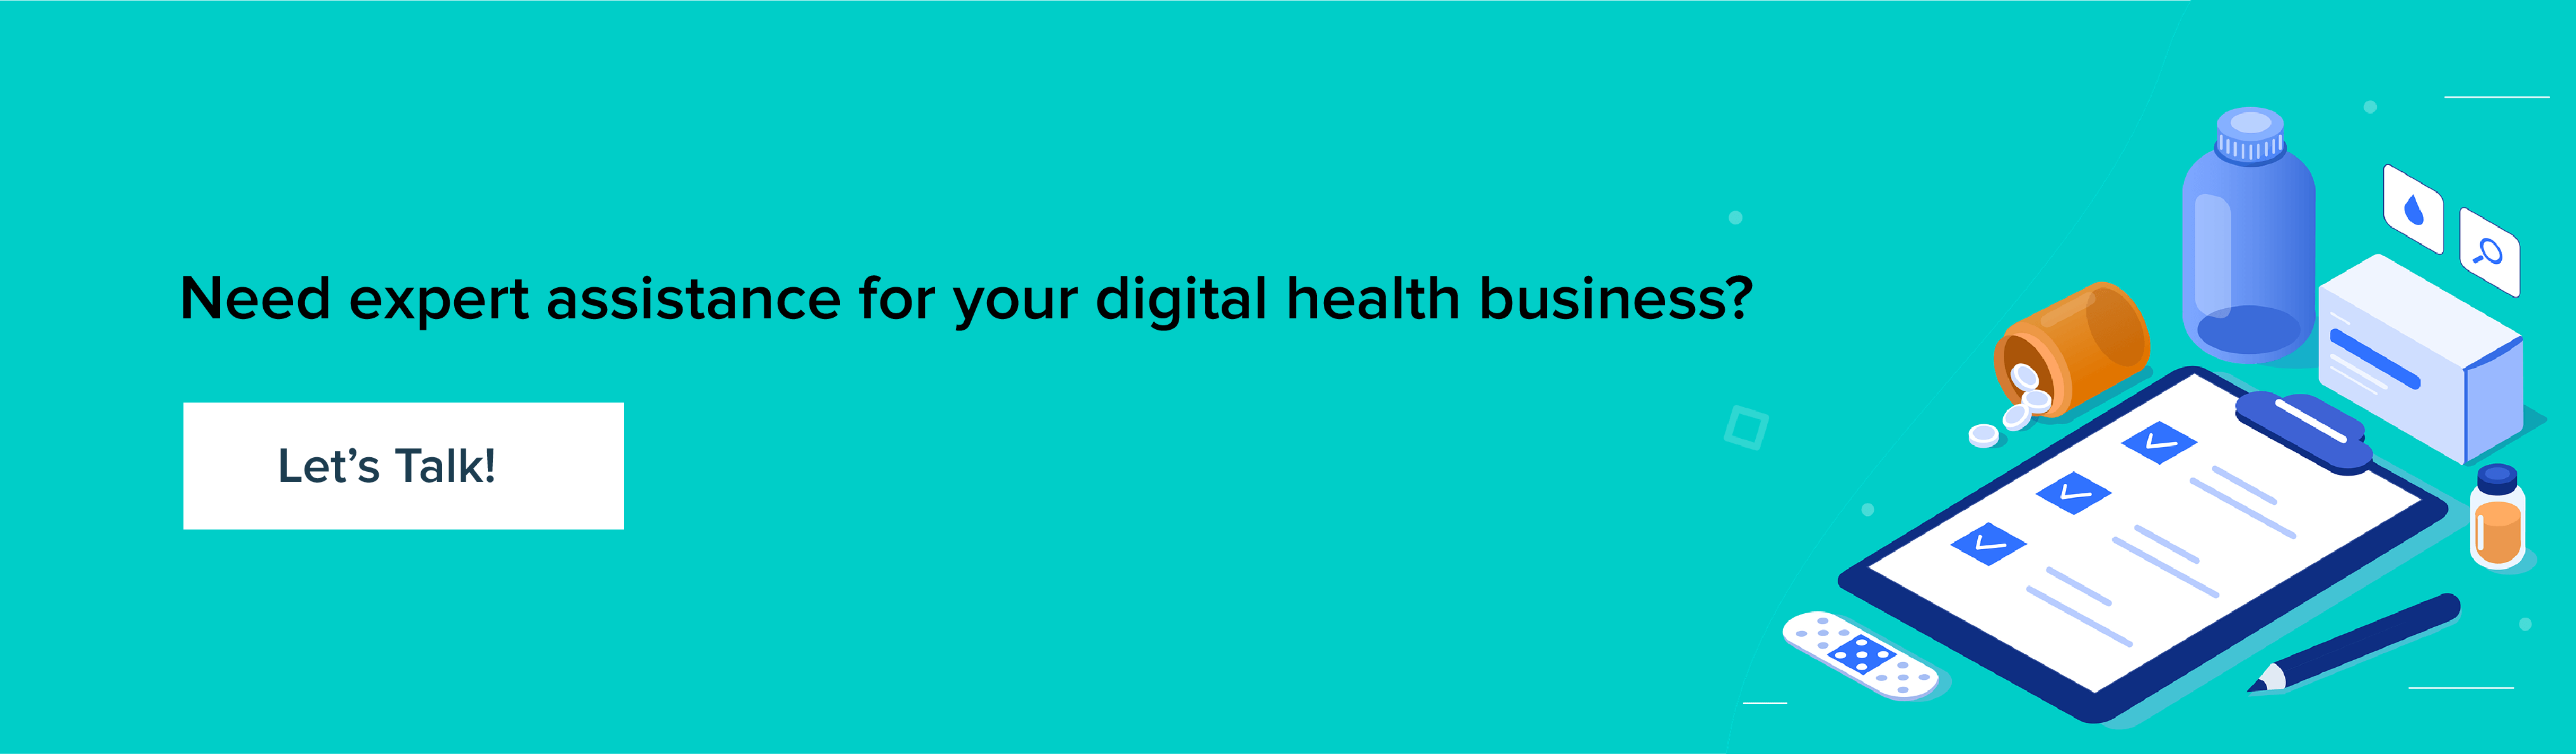 expert assistance for digital health business